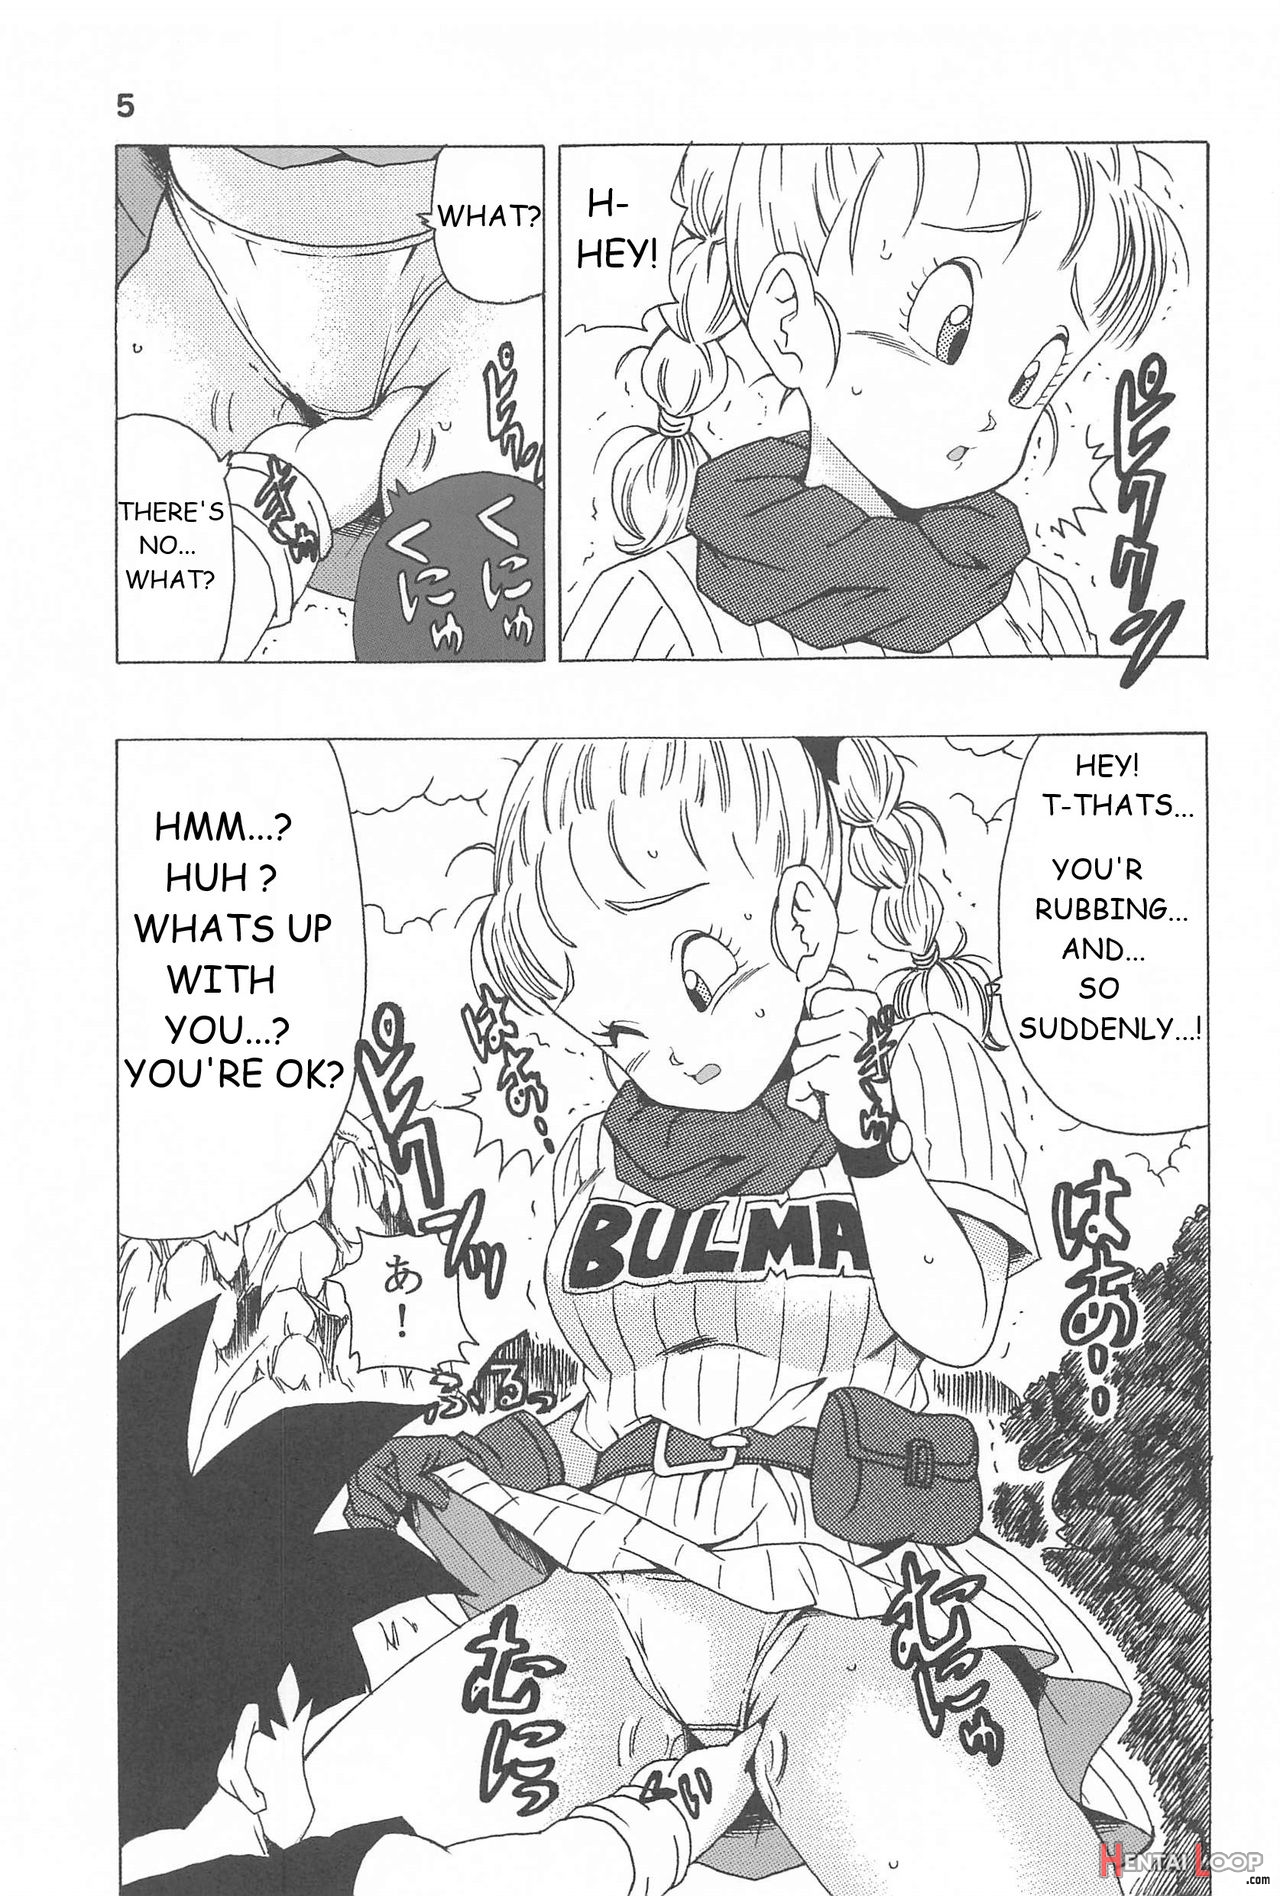 Bulma No Saikyou E No Michi page 5